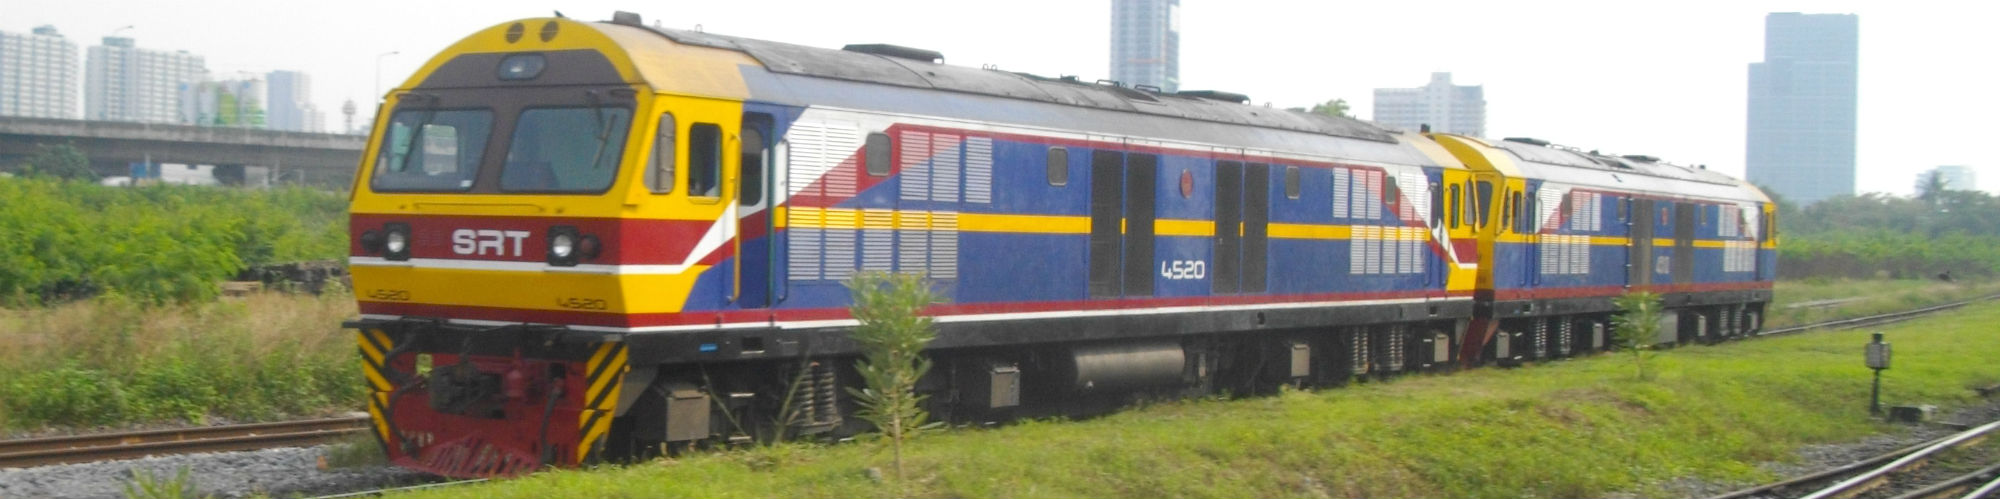 Hitachi (1994) Locomotive Stock - Engine 4520